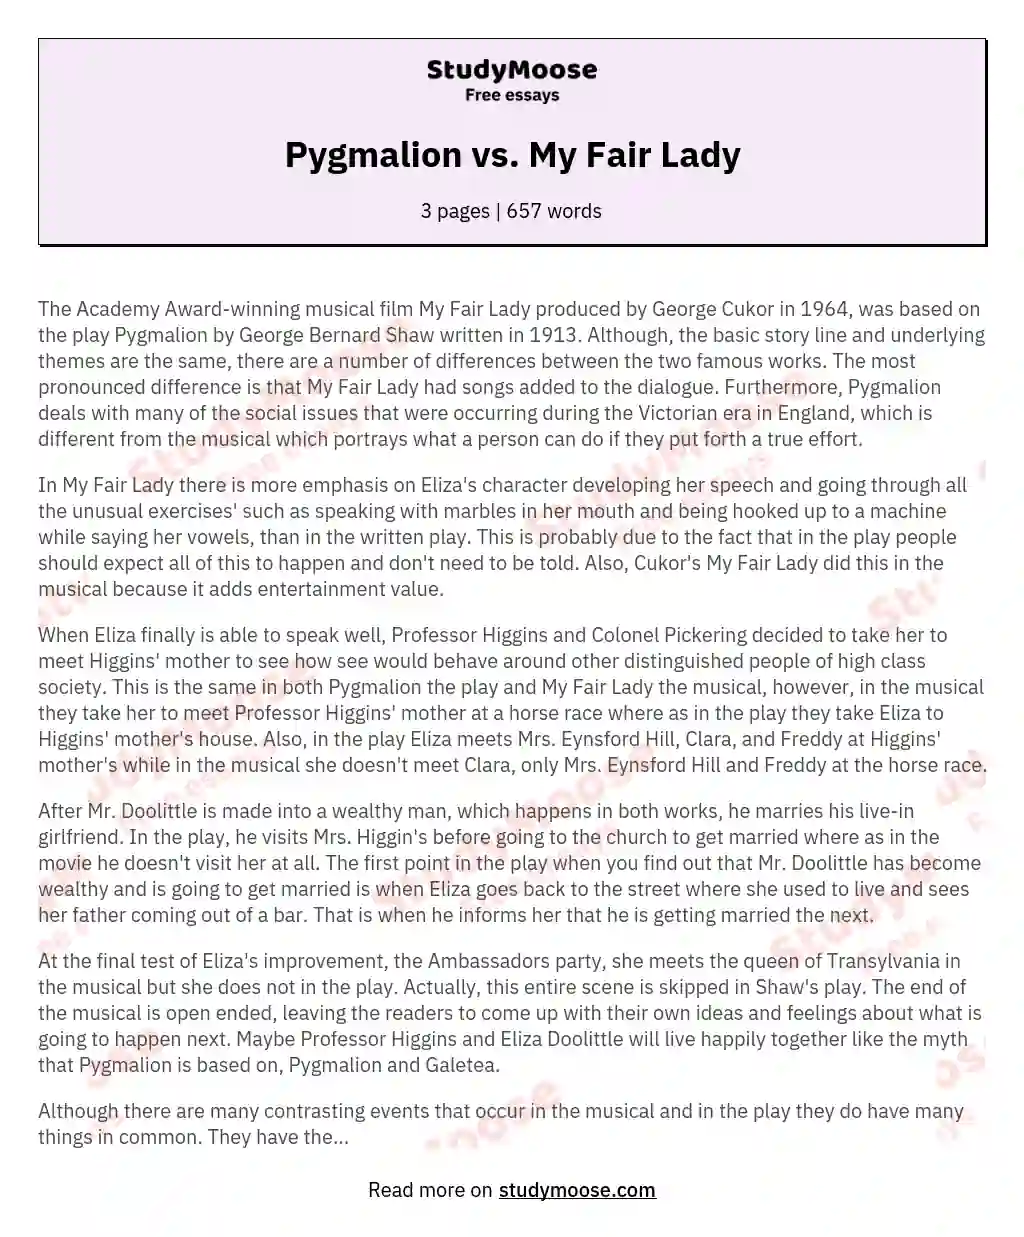 Pygmalion vs. My Fair Lady essay